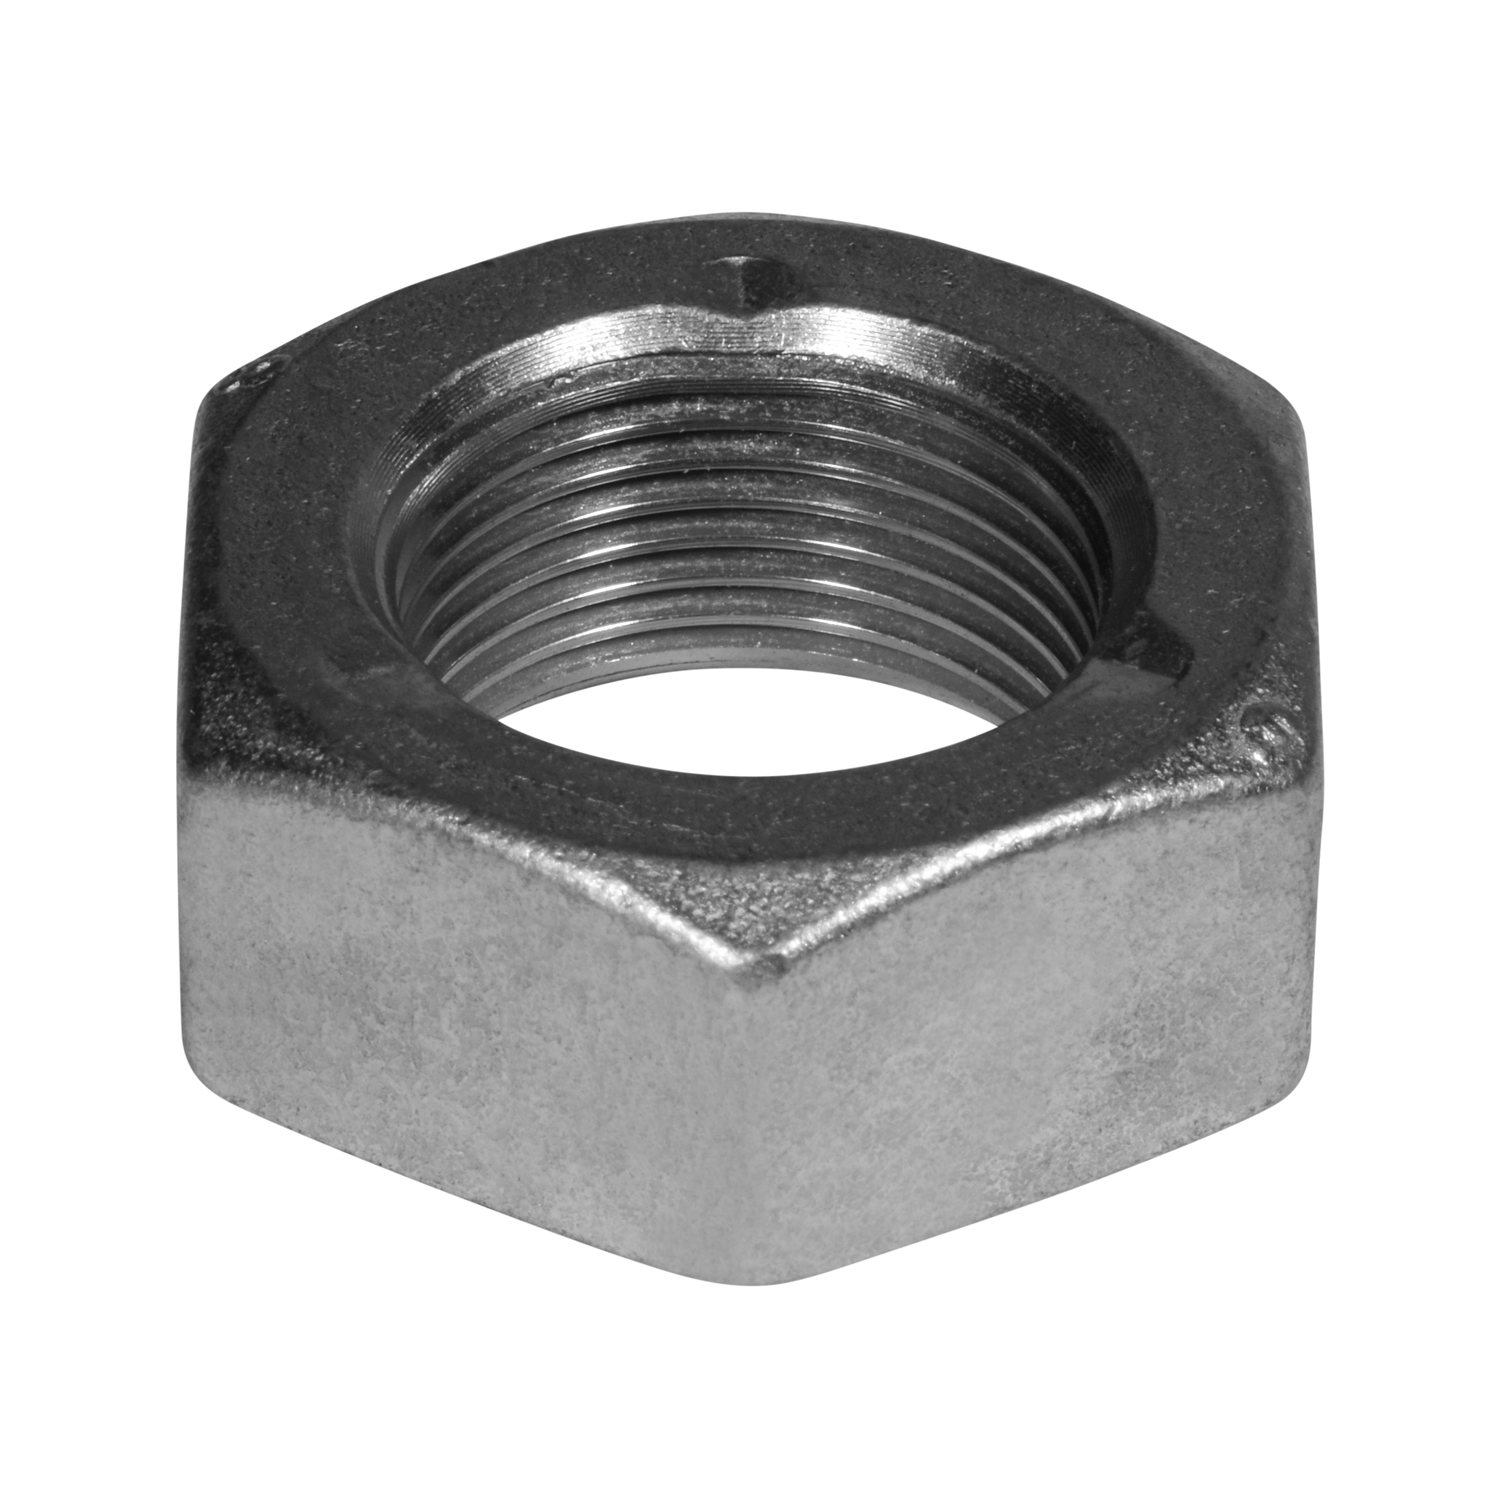 Yukon Rear Pinion Nut for Dana M275/M300 diff, M30-2.0 diameter/thread size 